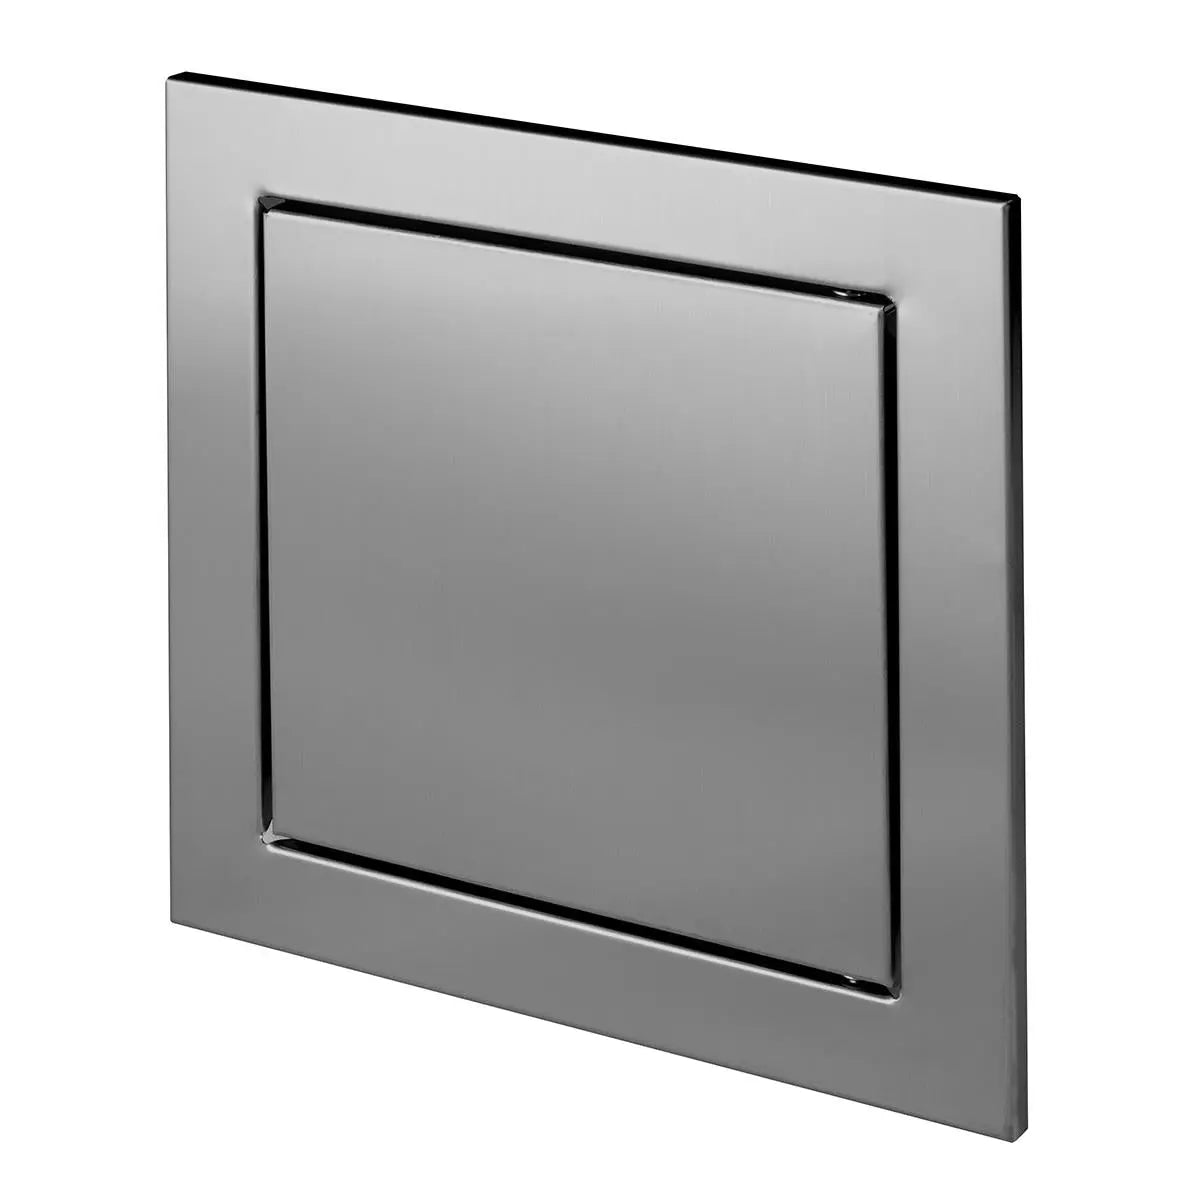 Access Panel Stainless Steel Inspection Door Revision Inspection Access Panels